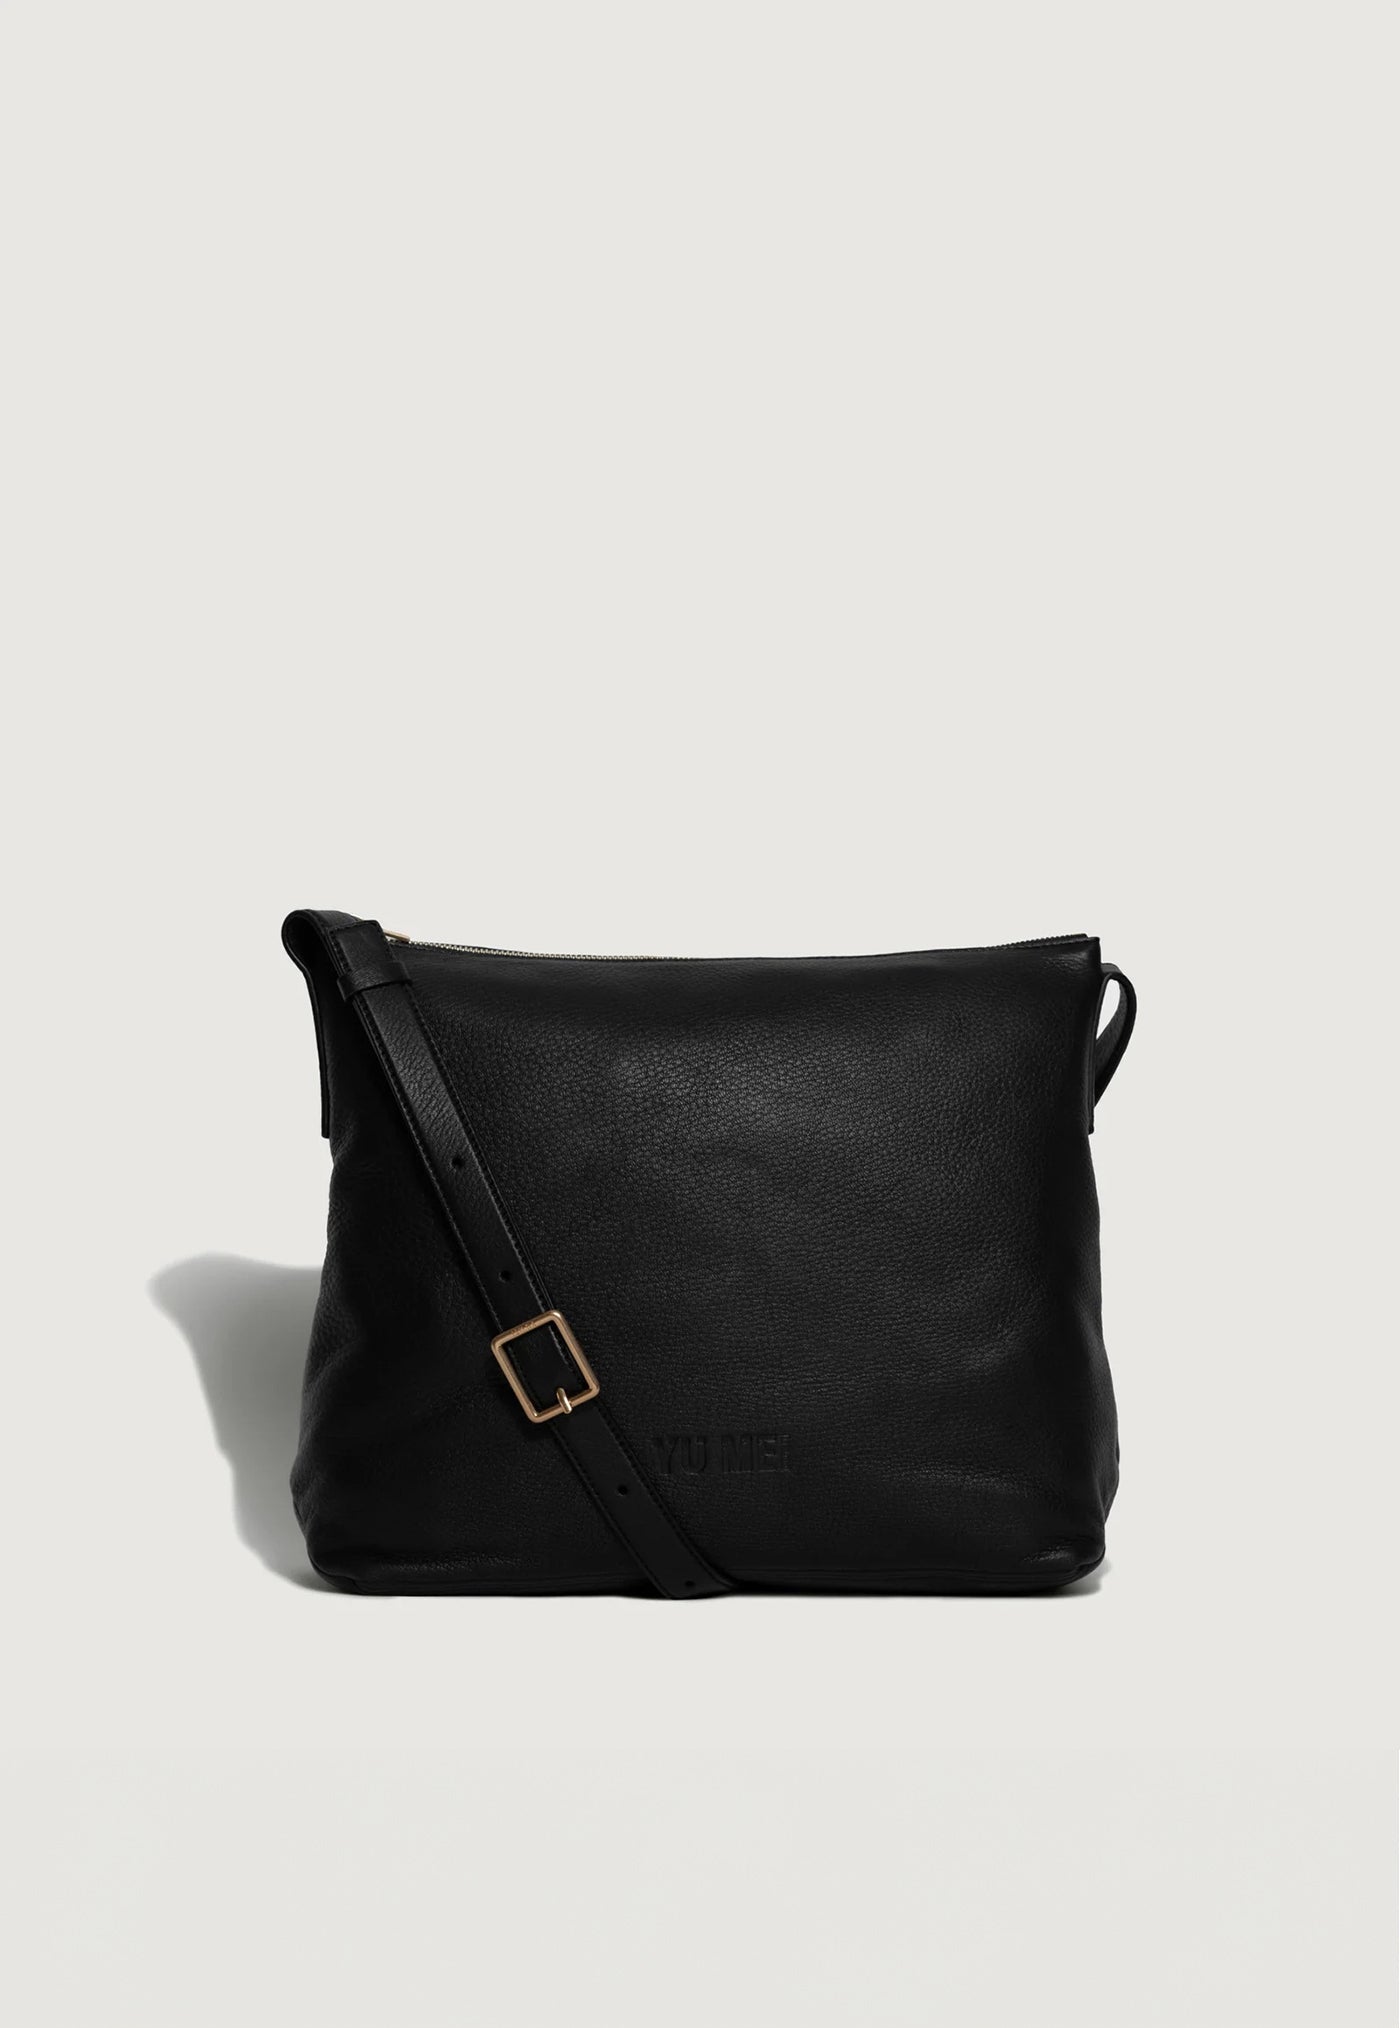 Braidy Bag - Black sold by Angel Divine